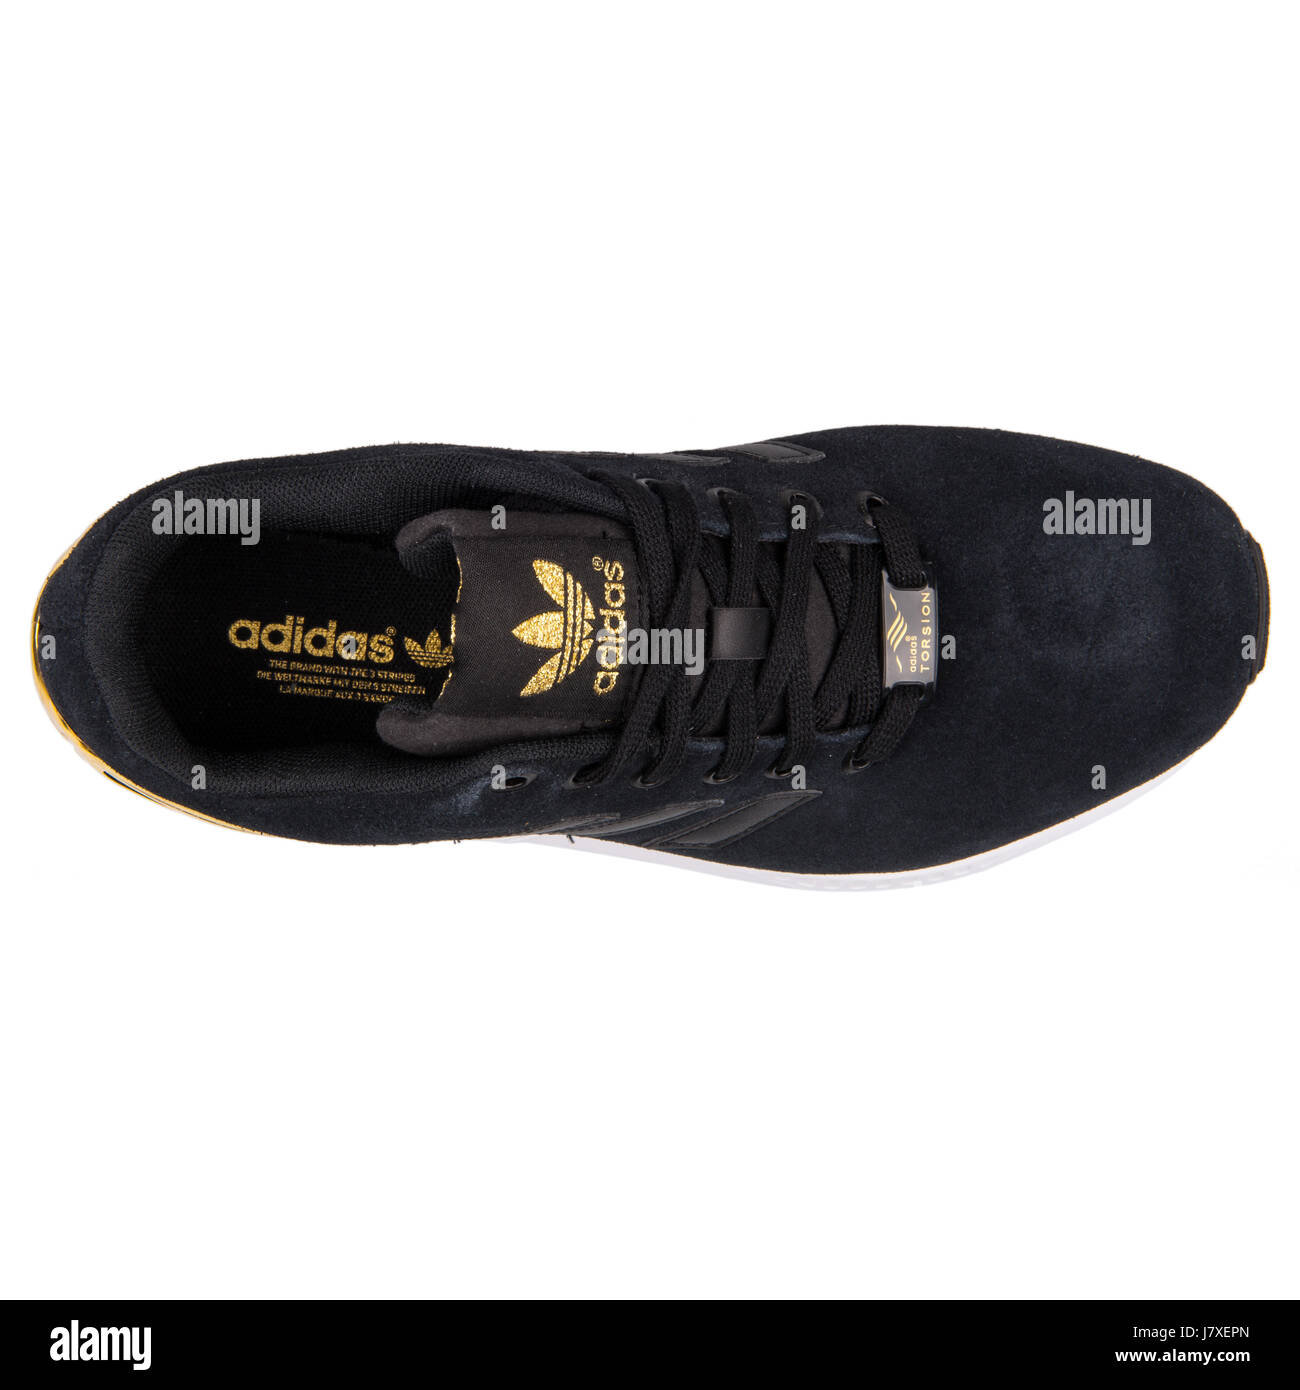 Adidas ZX Flux W Women's Black and Gold Sneakers - B35319 Stock ... مروحة سقف